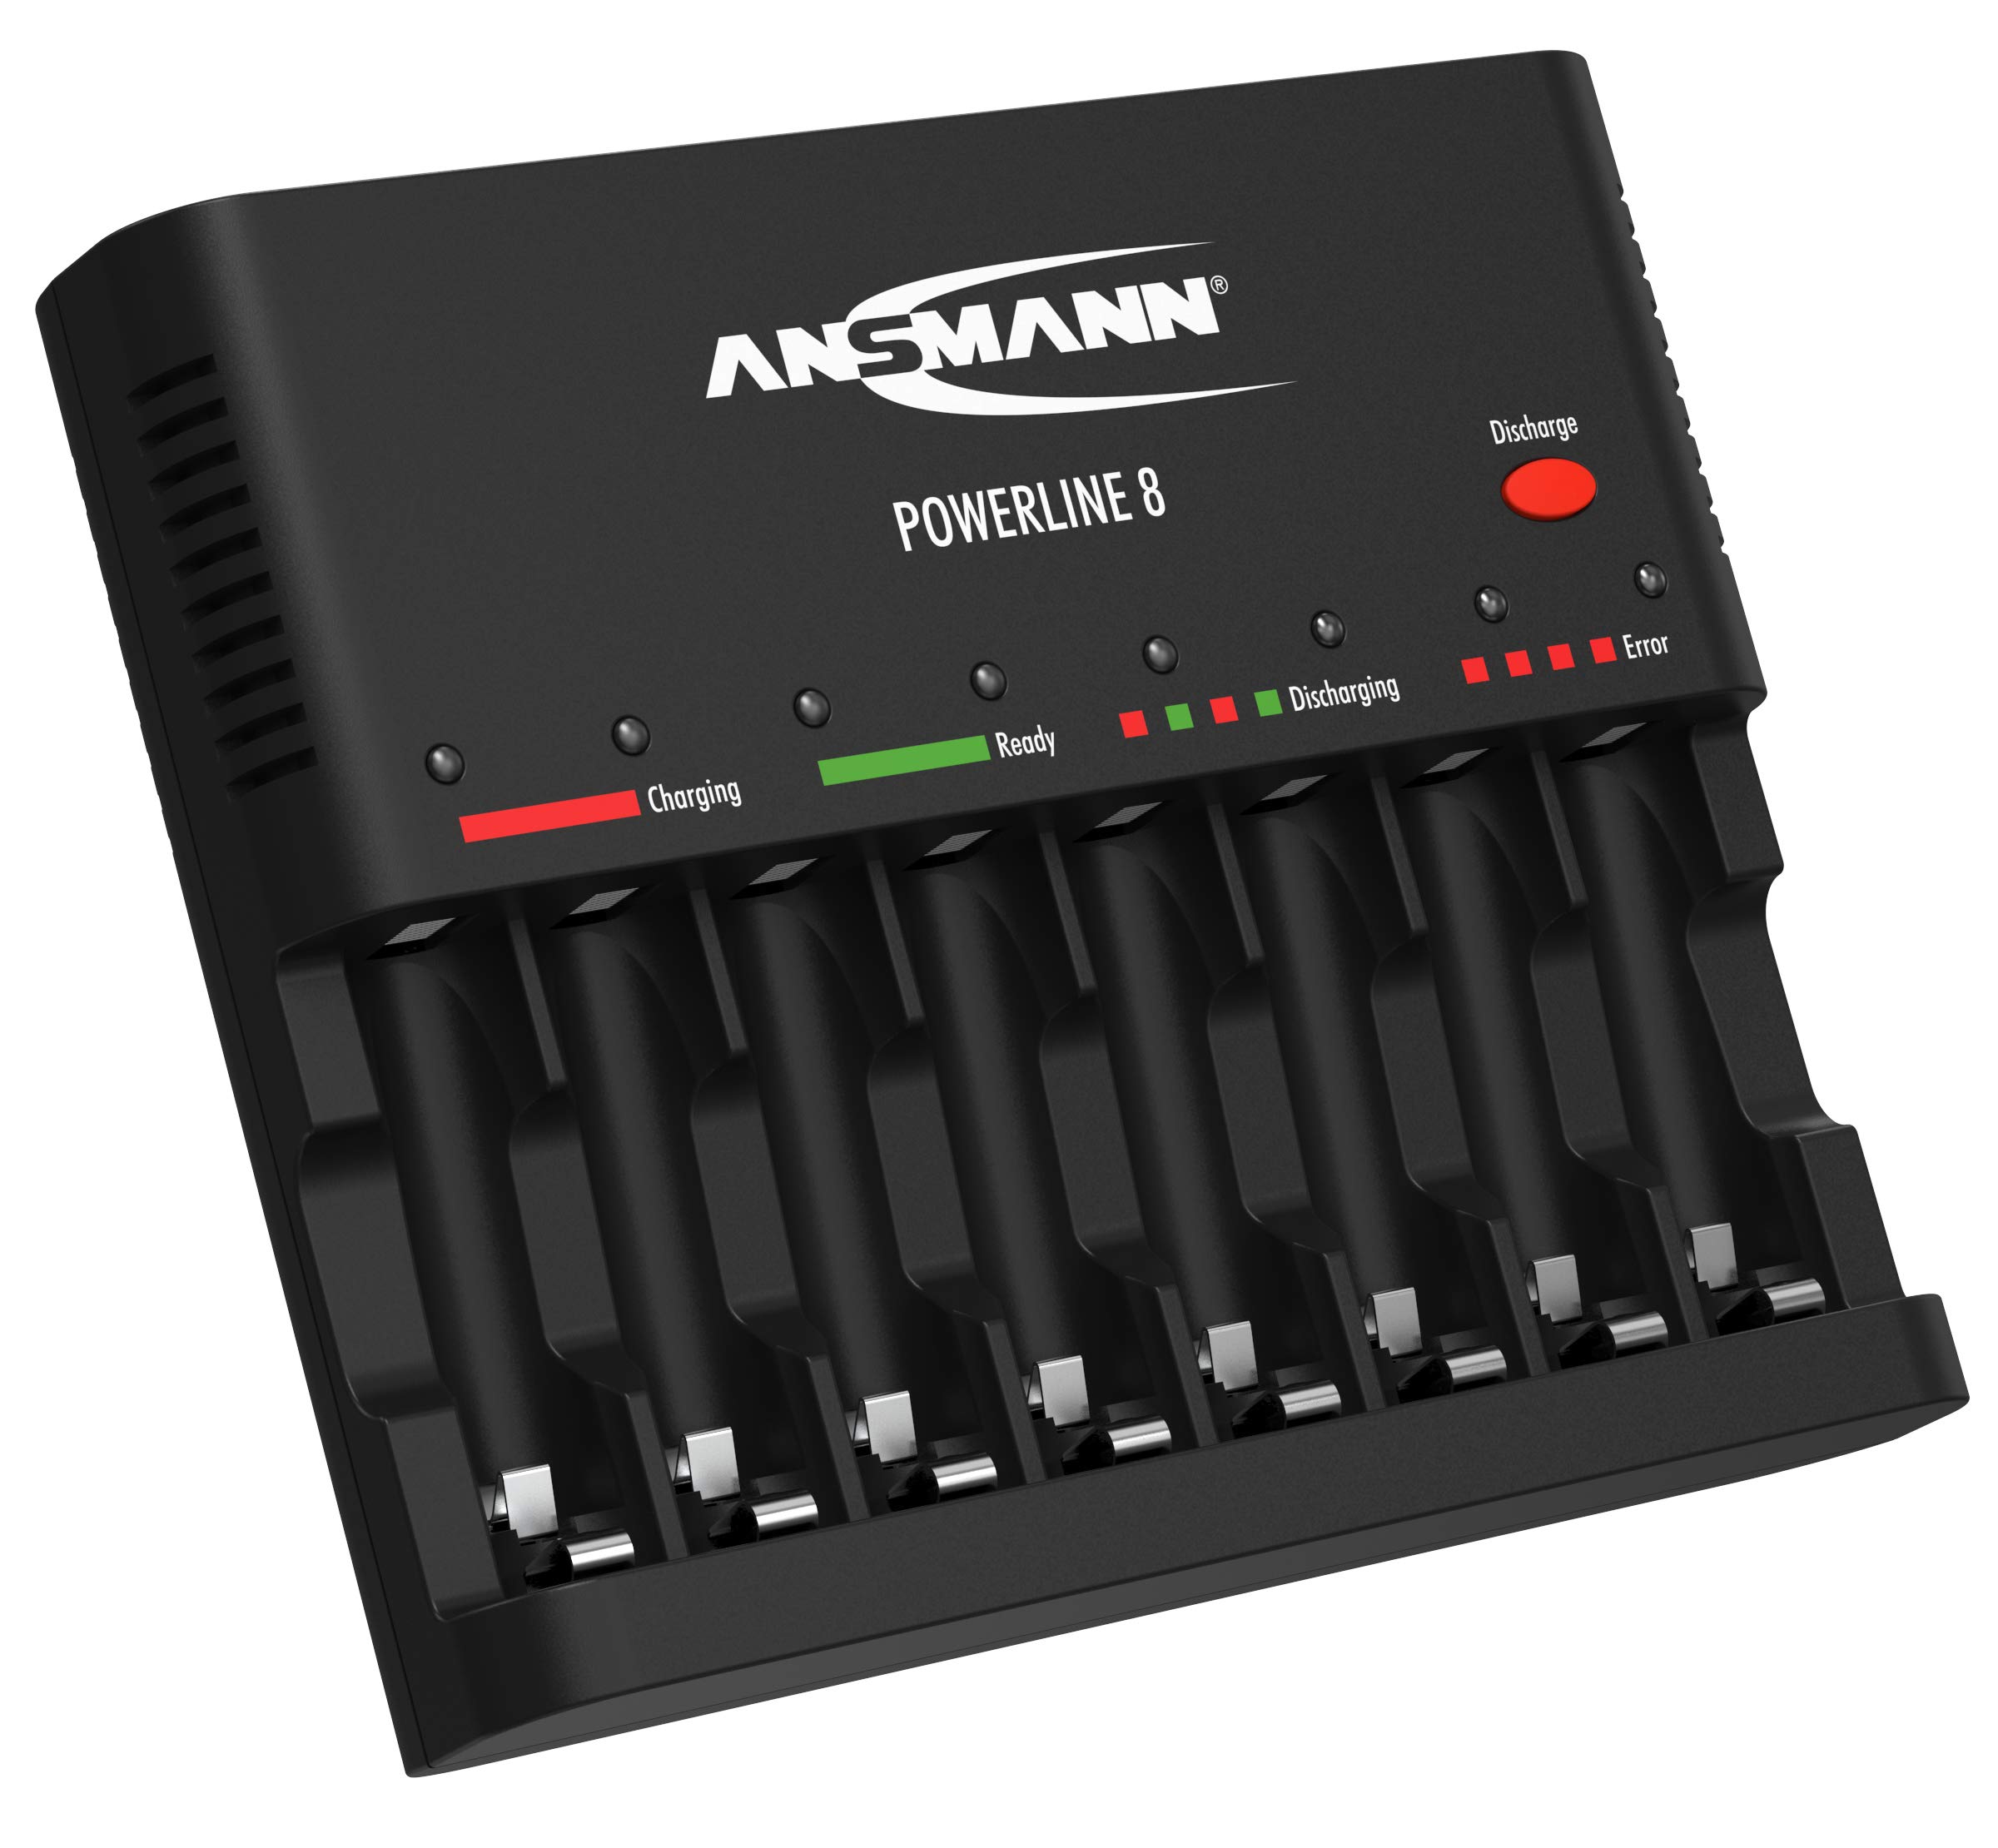 ANSMANN Akku-Ladegerät zum Laden & Entladen von 8X AA/AAA NiMH Akkus - 8-Fach Batterieladegerät mit Einzelschachtüberwachung, automatische Abschaltung, Erhaltungsladung - Powerline 8